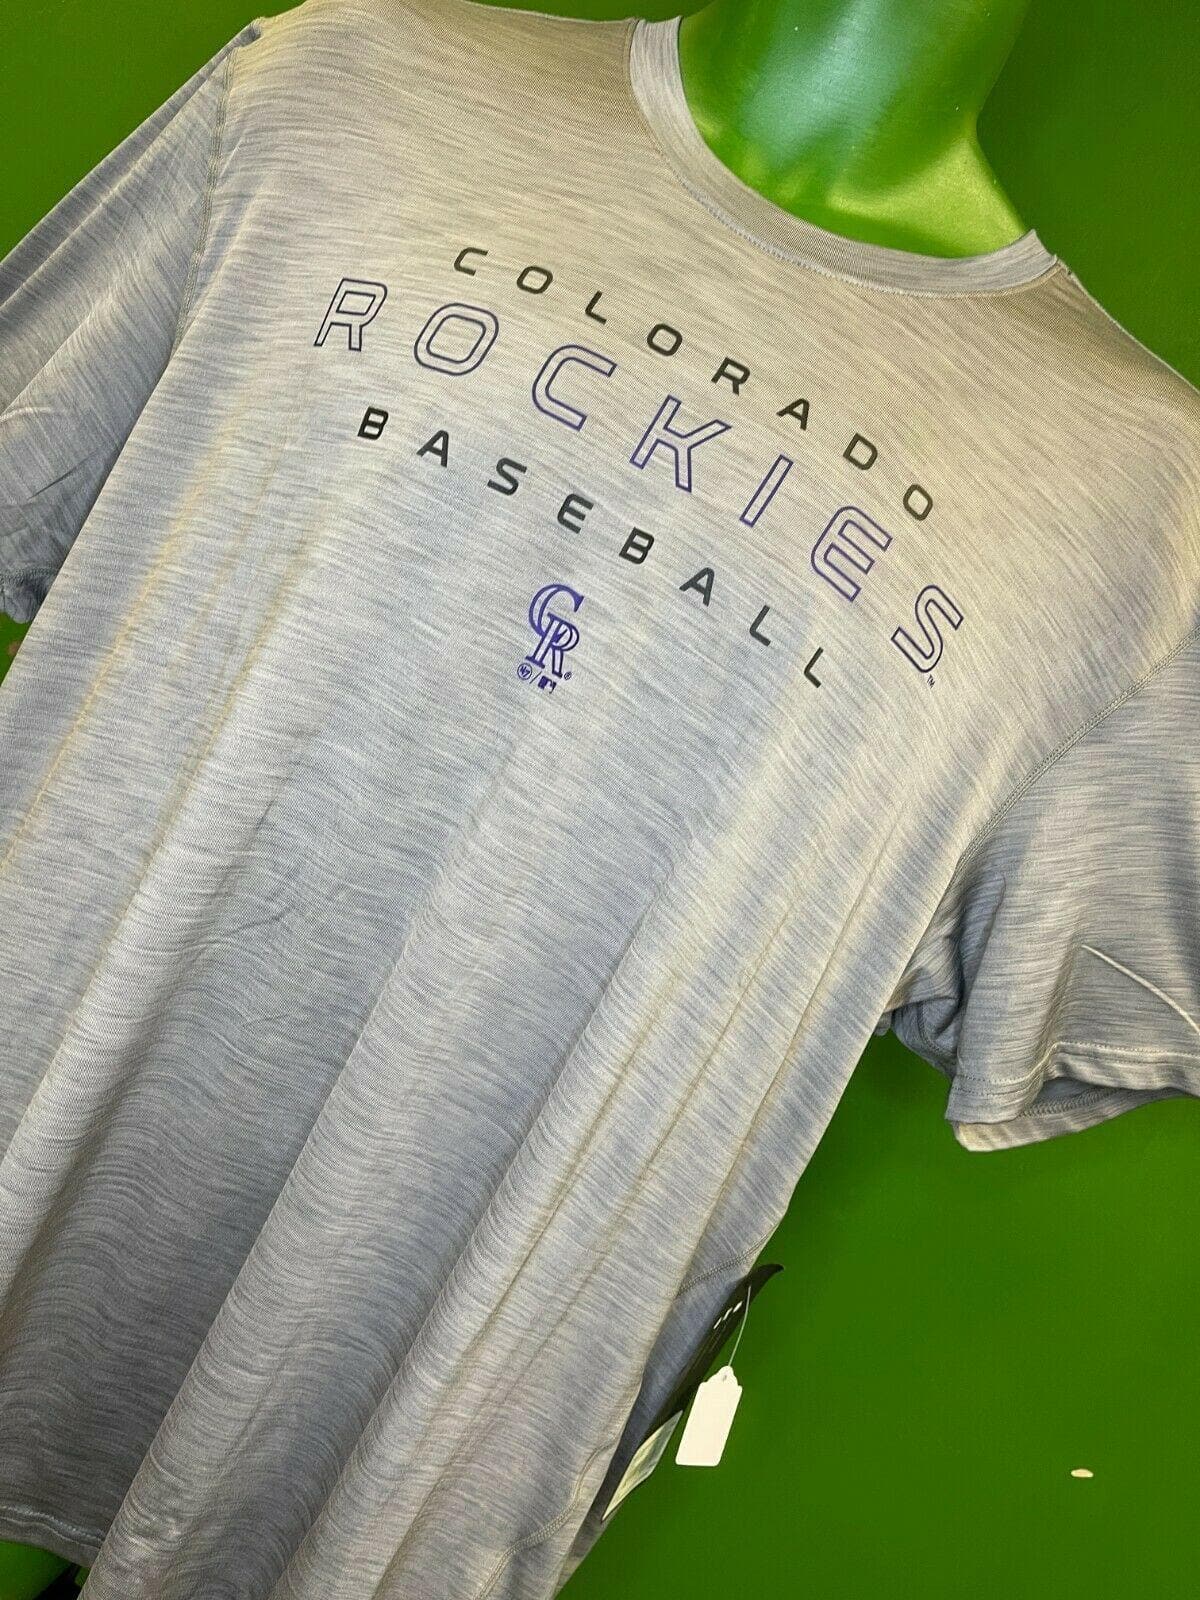 MLB Colorado Rockies '47 Grey T-Shirt Men's X-Large NWT